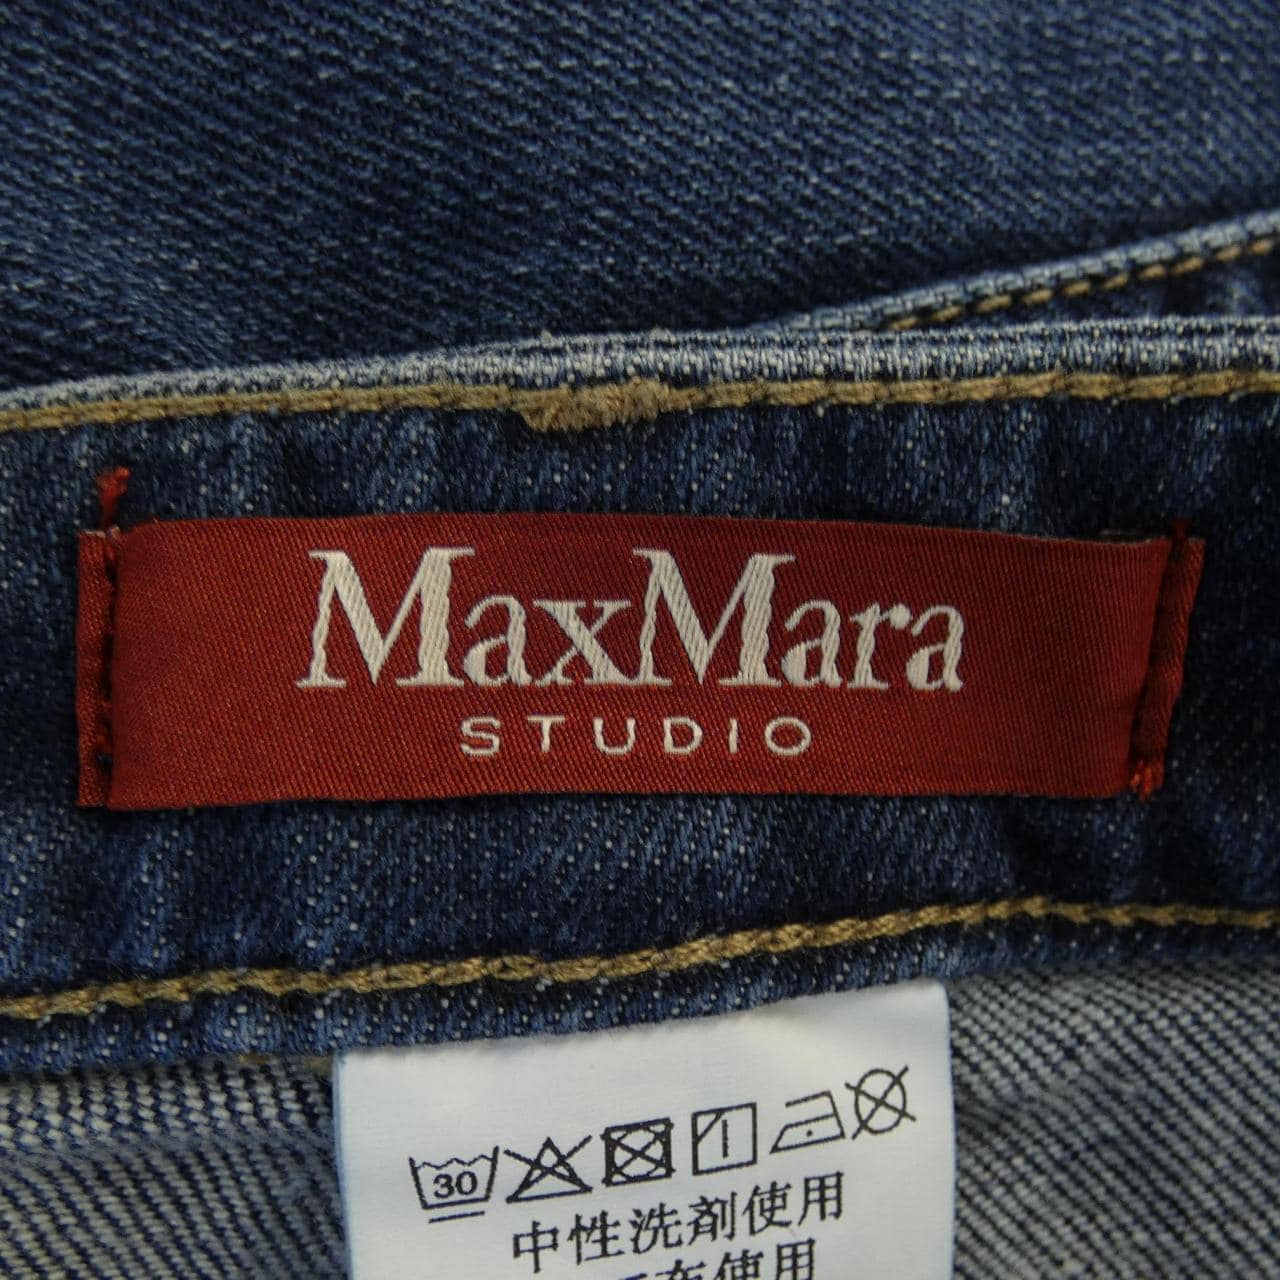 Max Max Mara STUDIO STUDIO Jeans